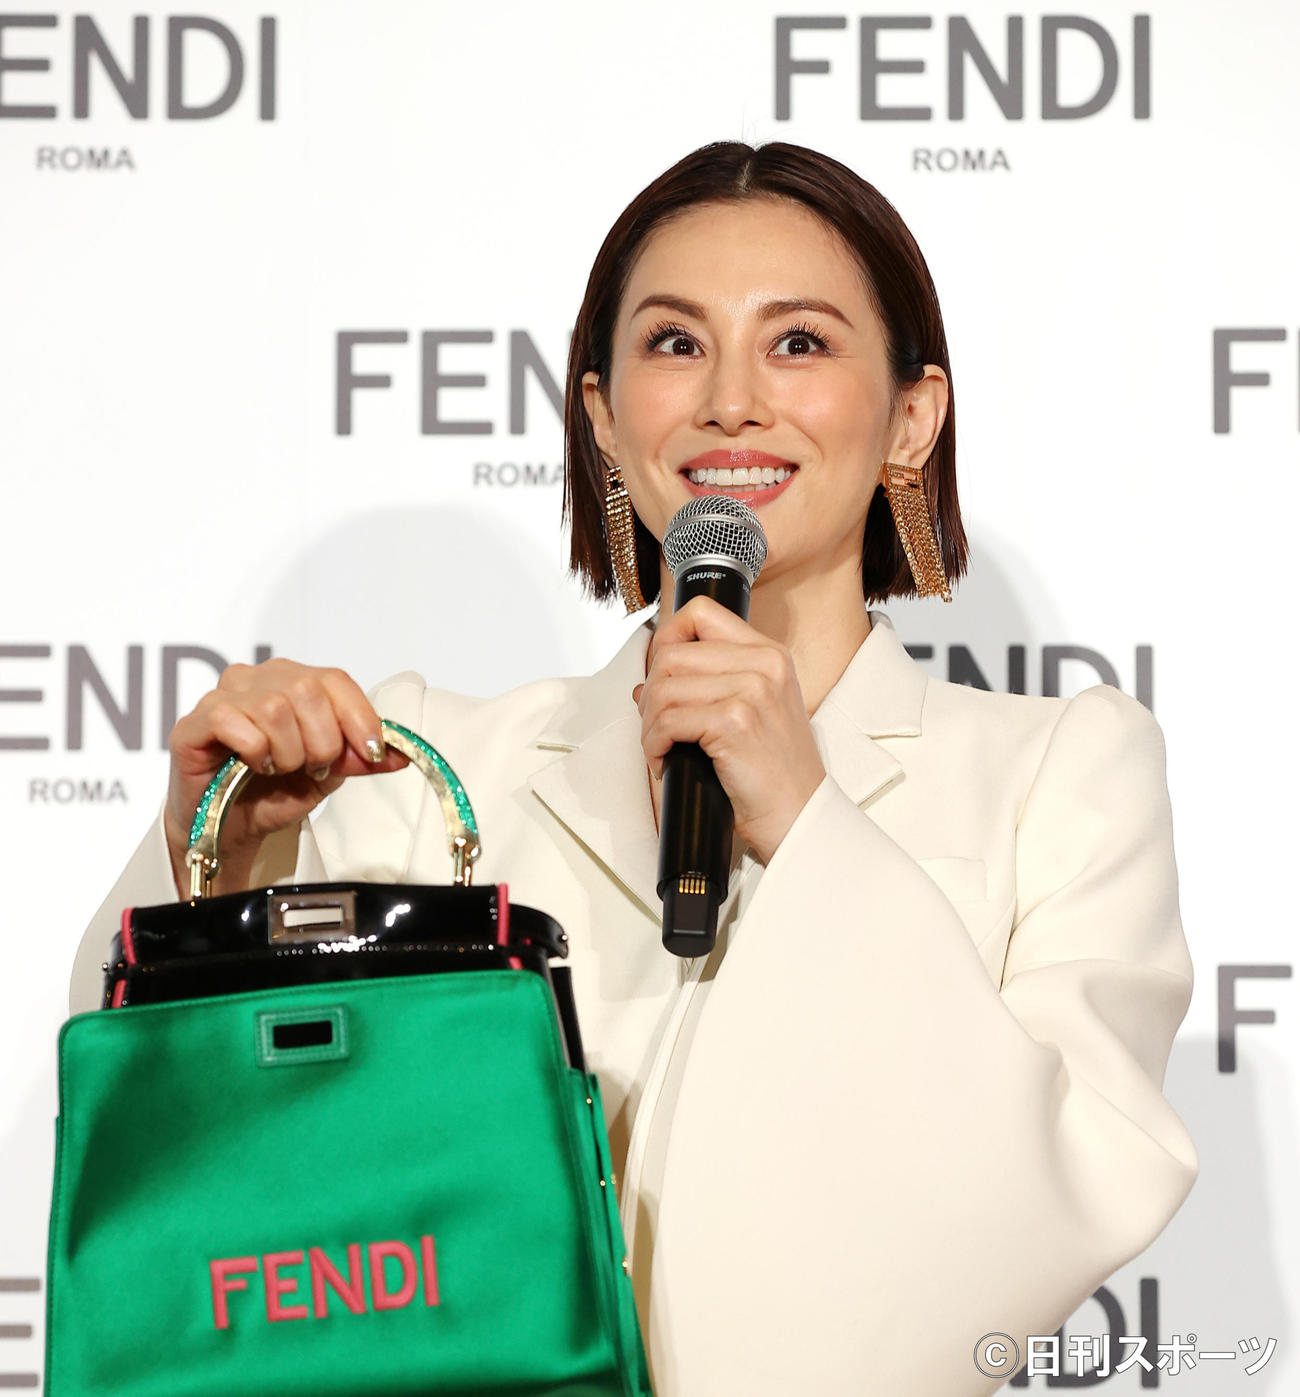 「FENDIジャパンブランドアンバサダー」に就任した米倉涼子は緑のバックを手に笑顔を見せる（撮影・浅見桂子）